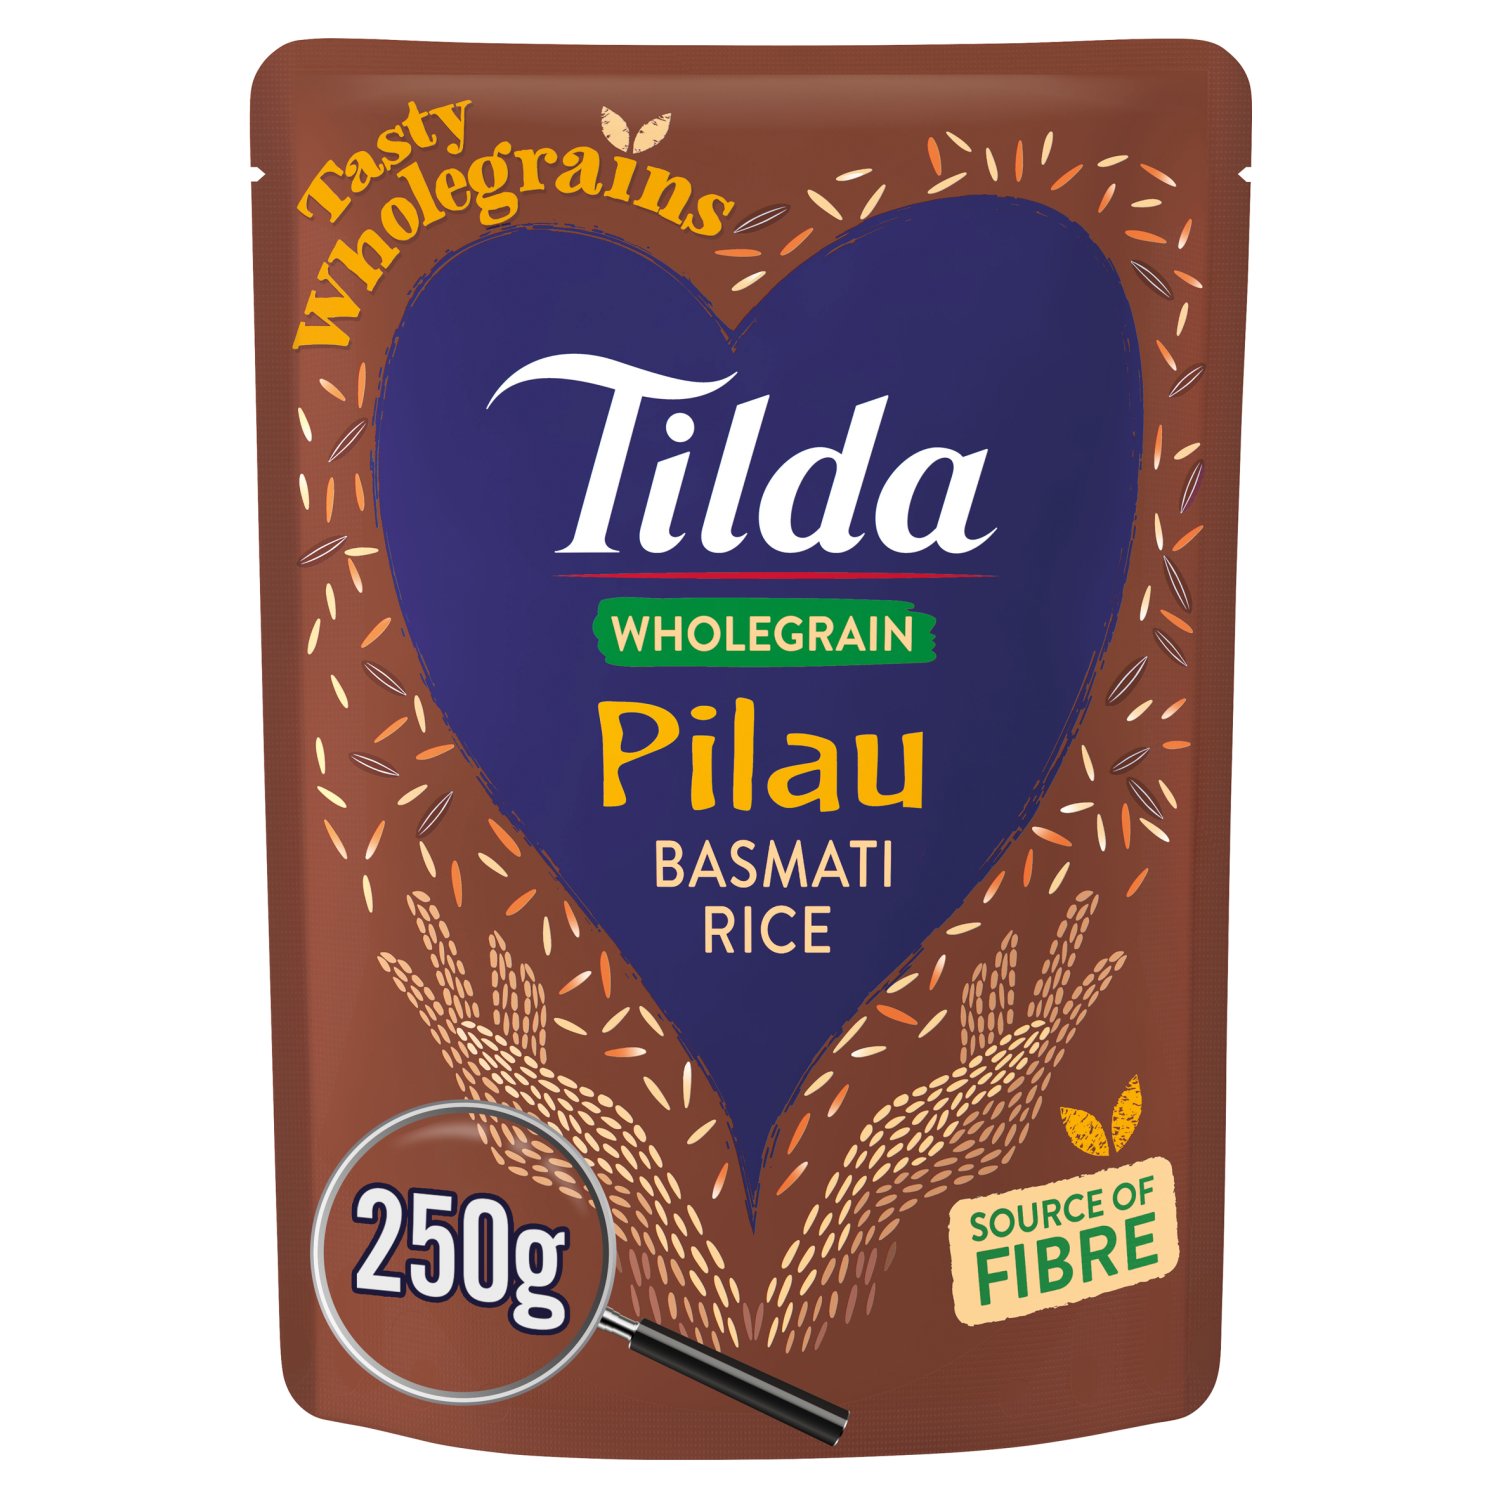 Tilda Microwave Wholegrain Pilau Rice (250 g)